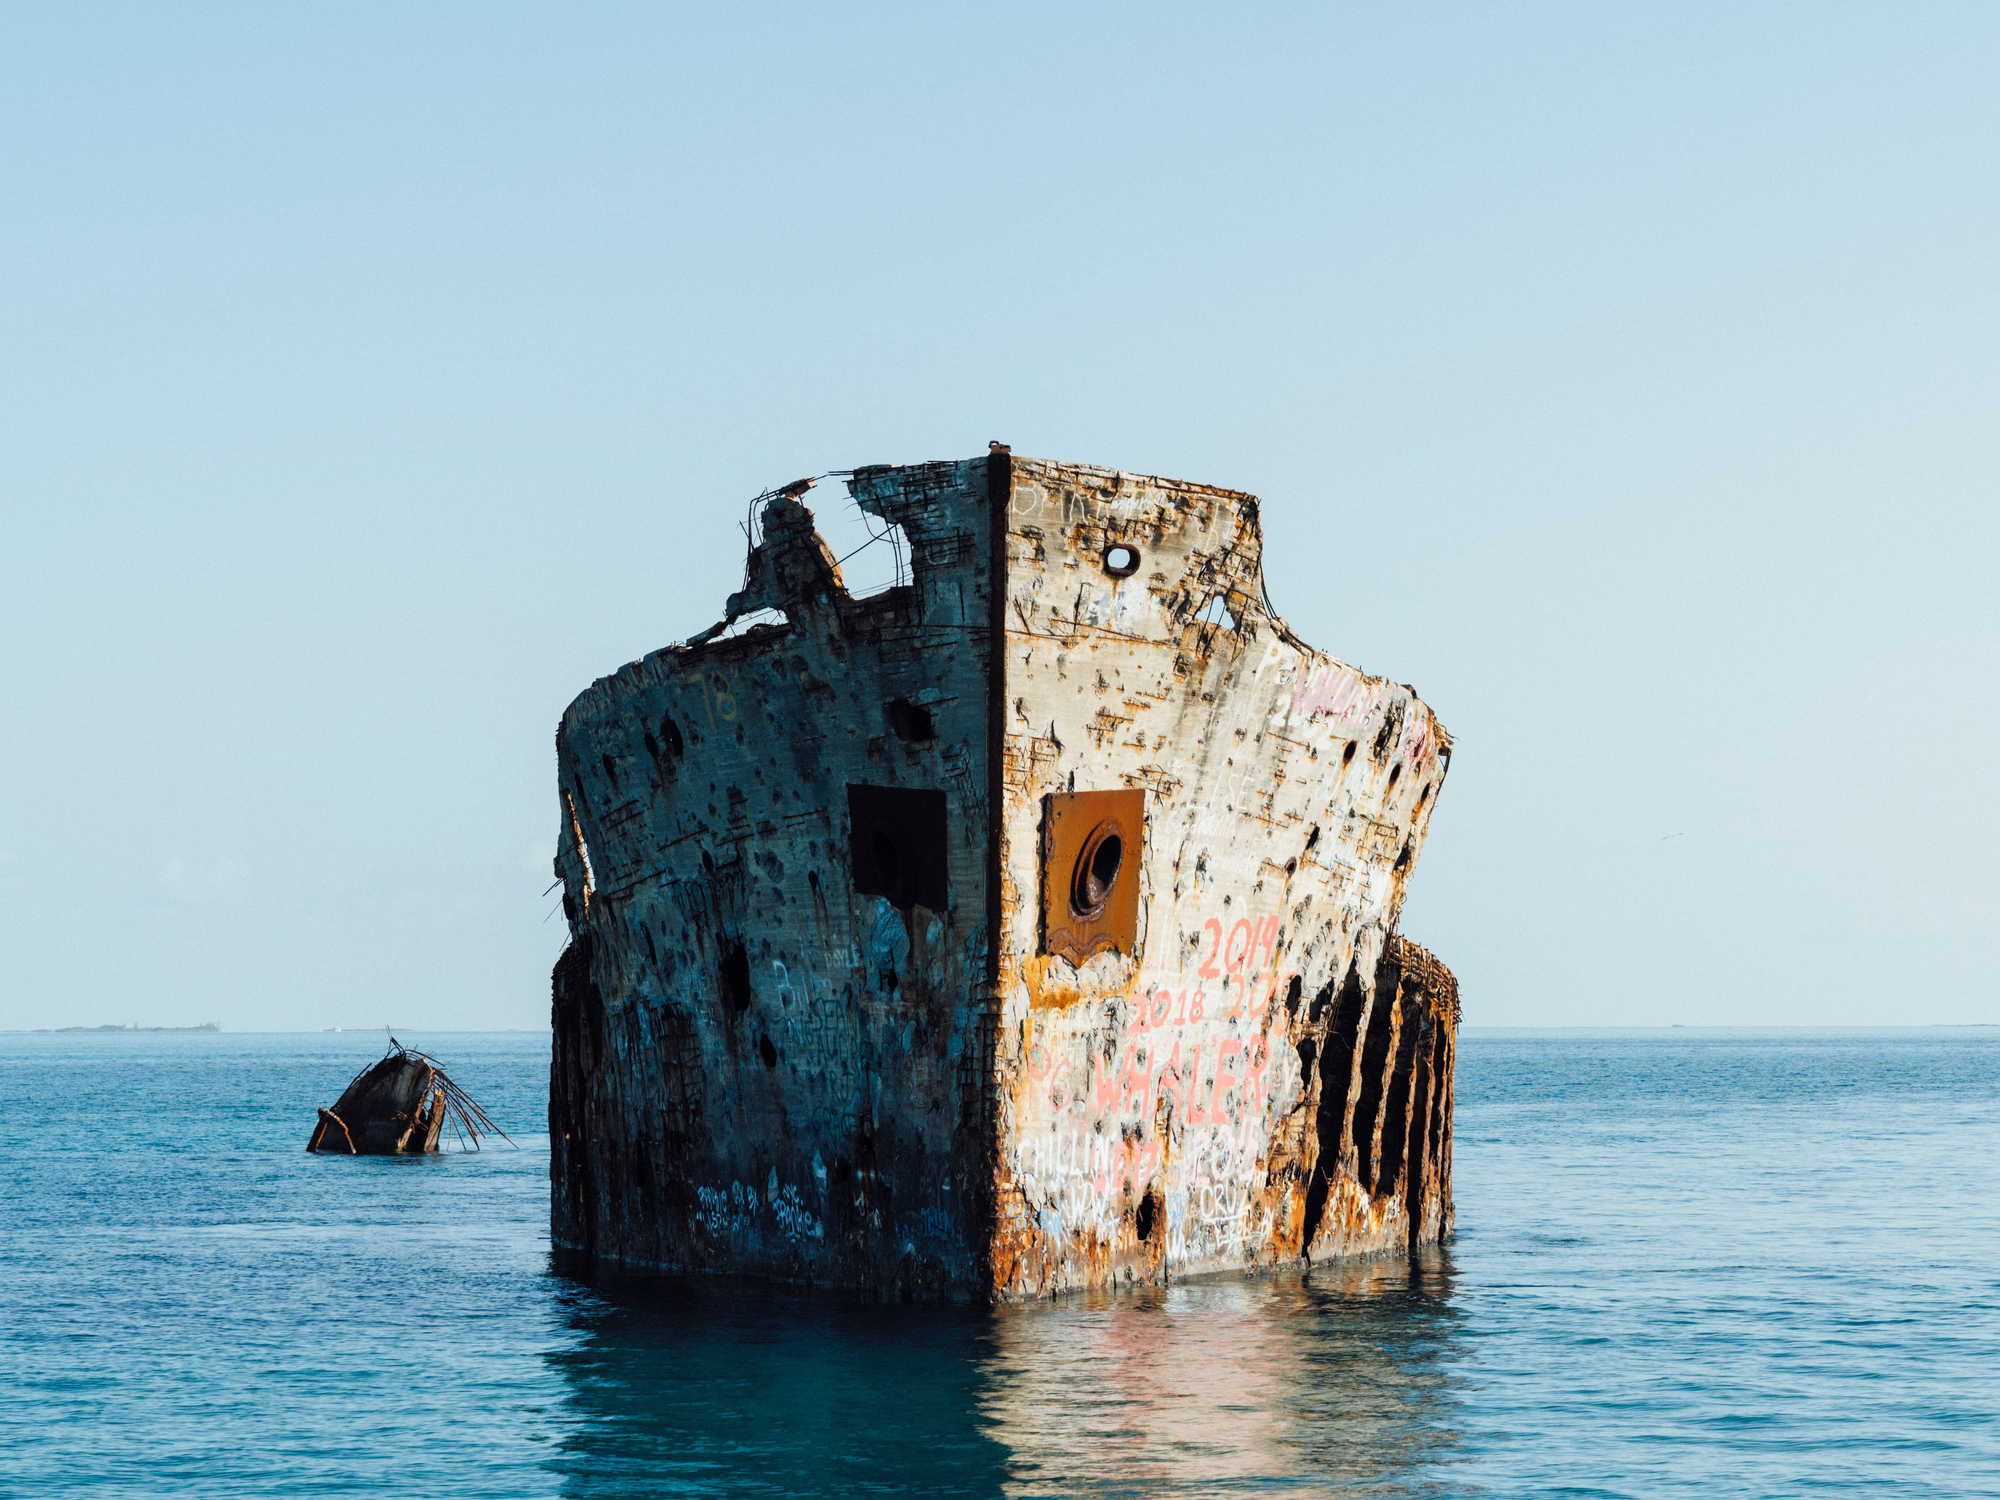 One of many Bahamas landmarks, the S.S. Sapona sunk from a hurricane off the coast of Bimini in 1926.